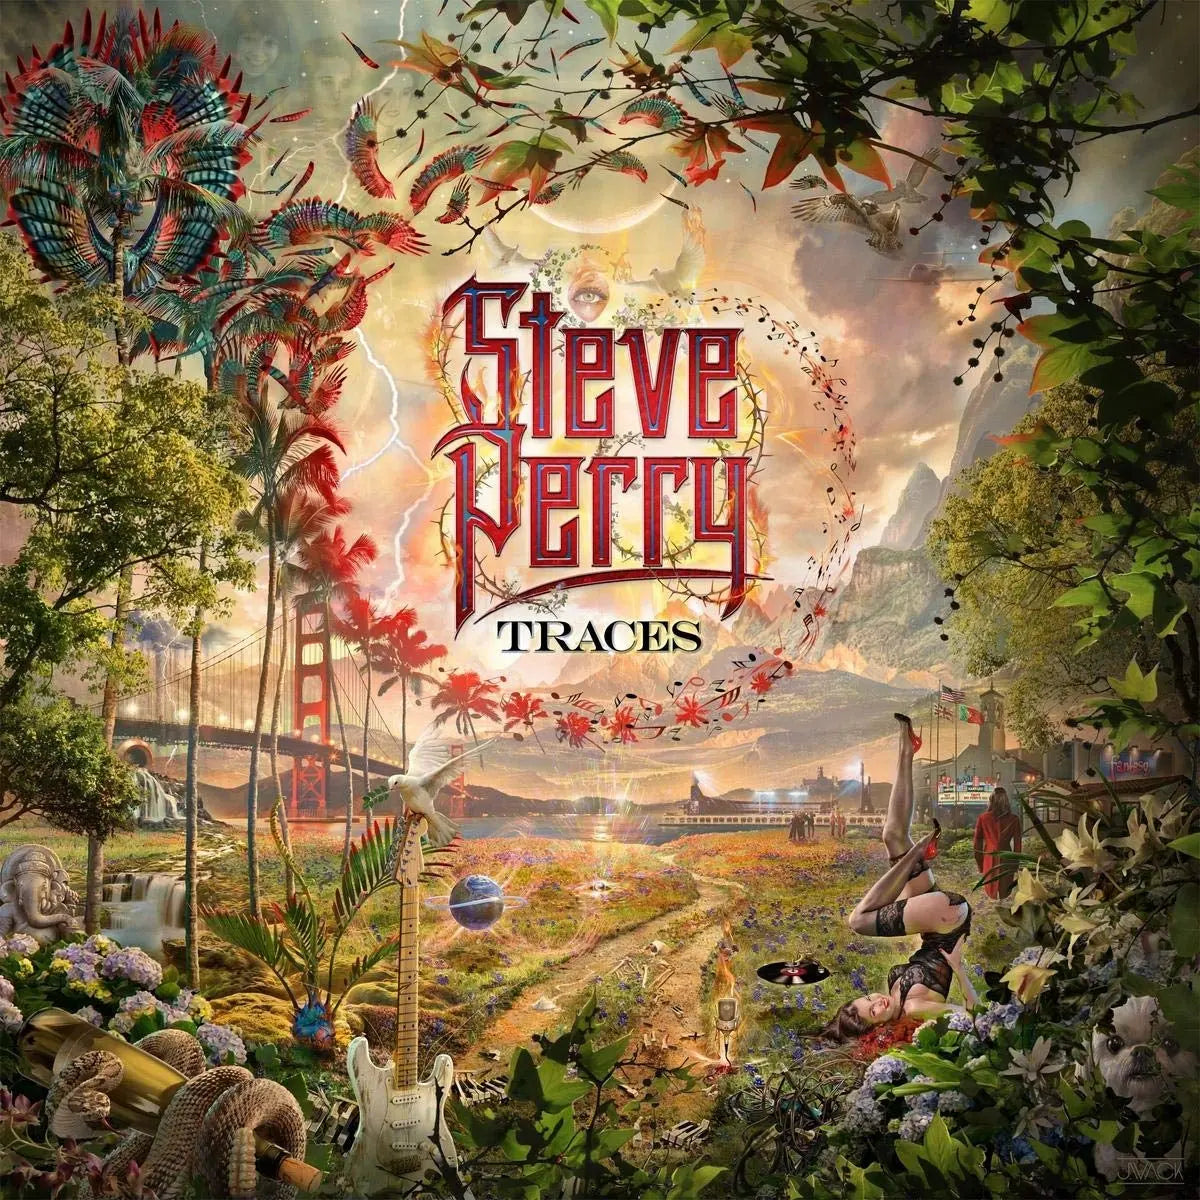 Steve Perry - Traces [Deluxe][2 LP Lenticular] [Vinyl]